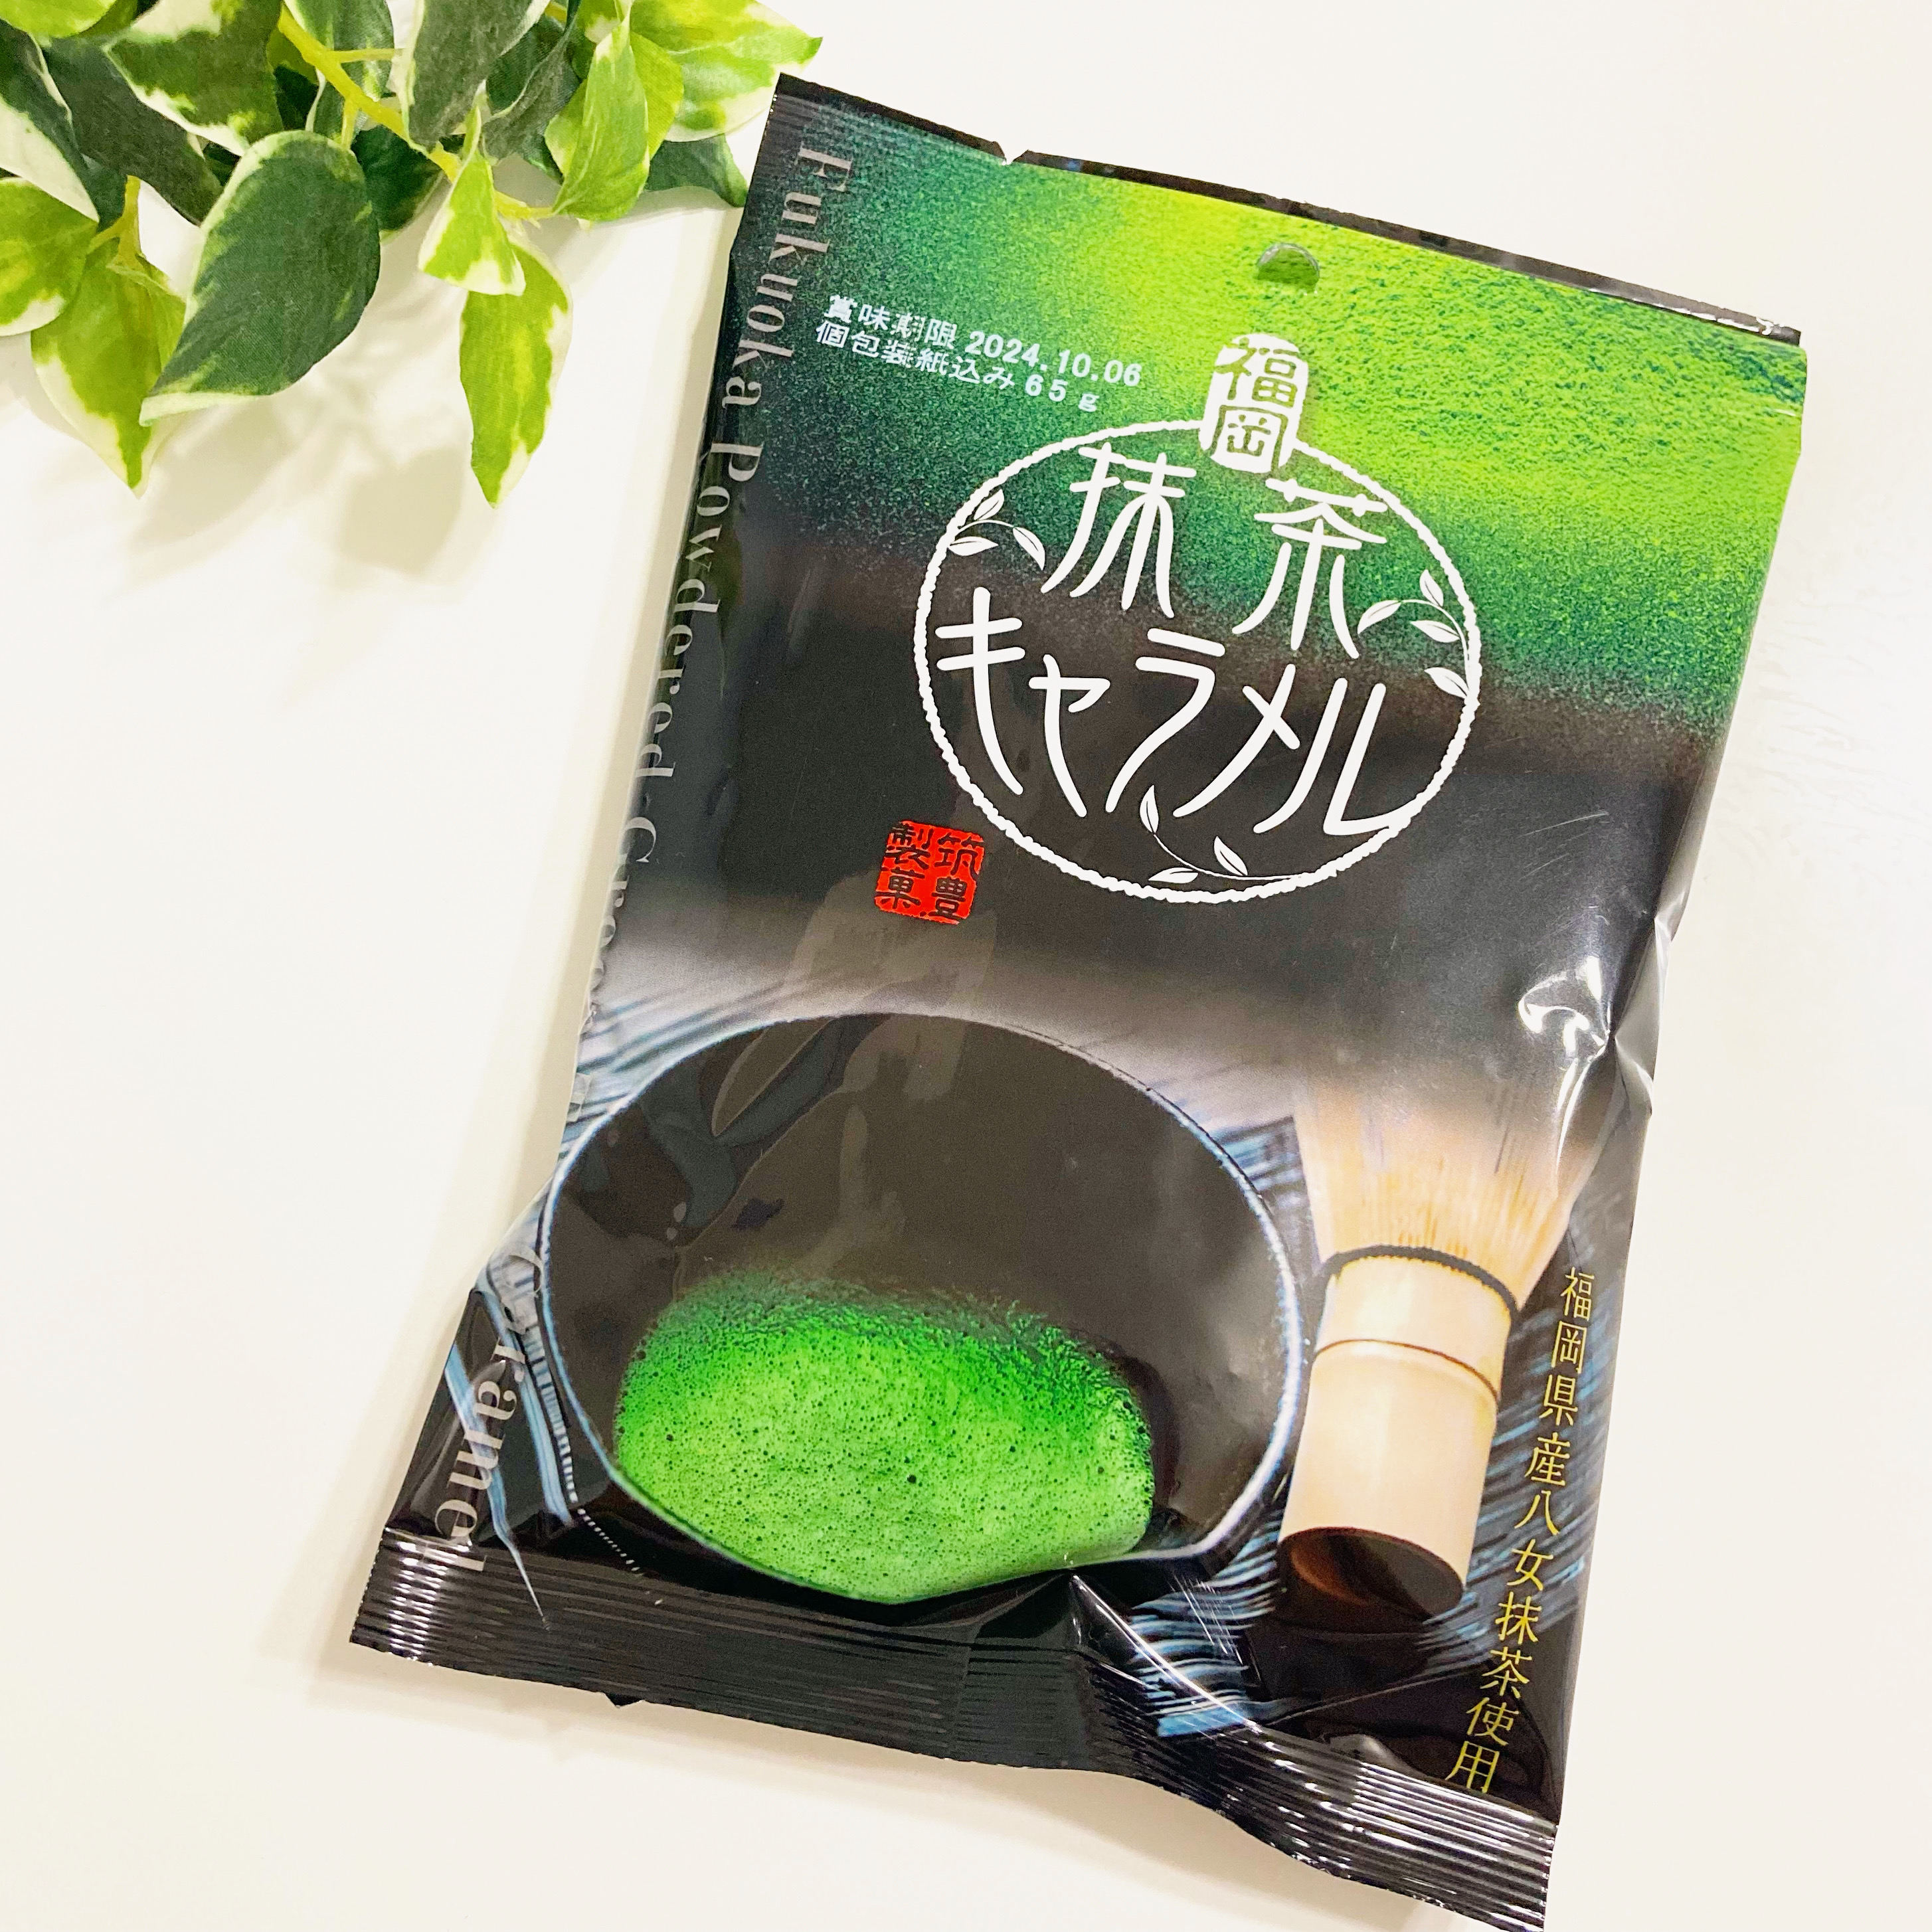 DAISO（ダイソー）のおすすめスイーツ「筑豊製菓 福岡抹茶キャラメル 65g」